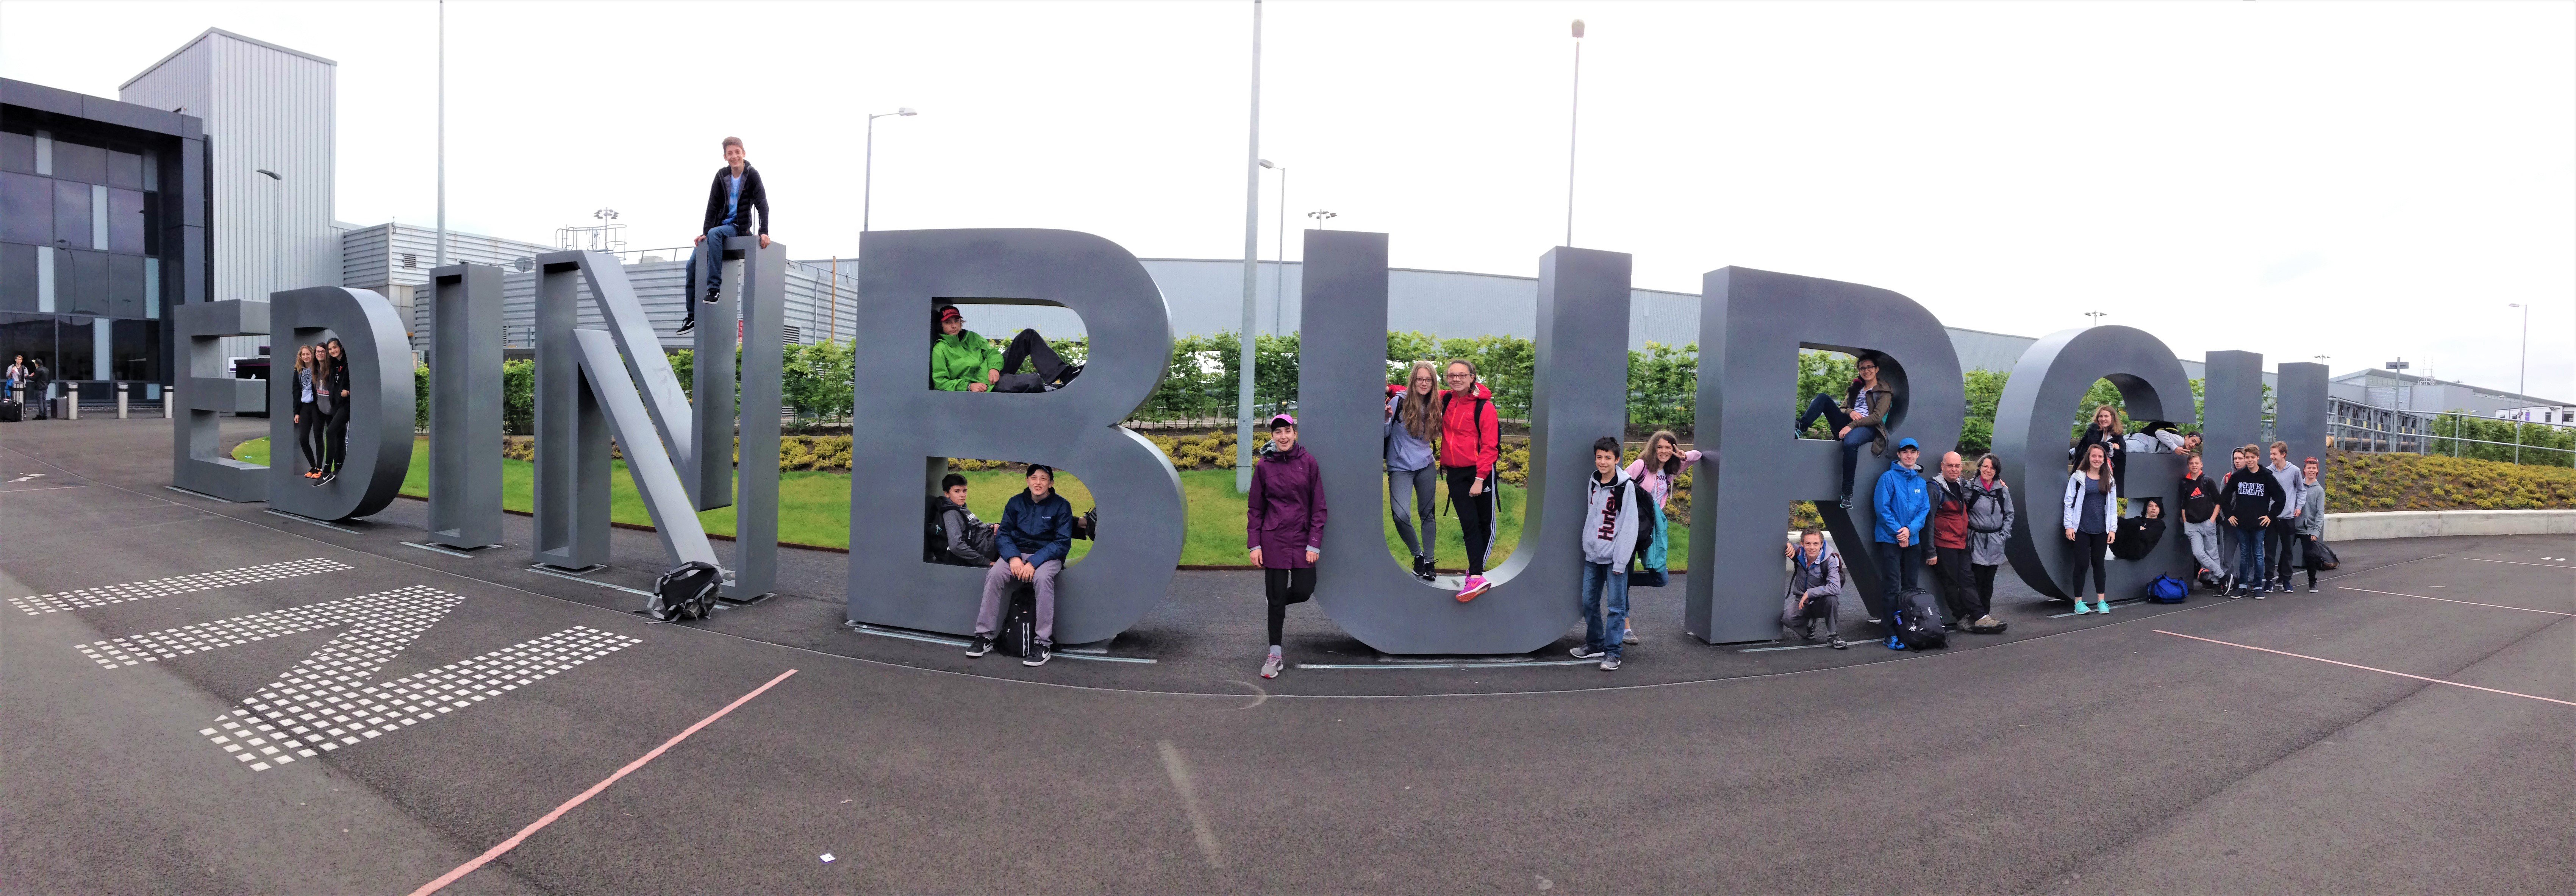 JSED_Scotland_Student group pic in Edinburgh